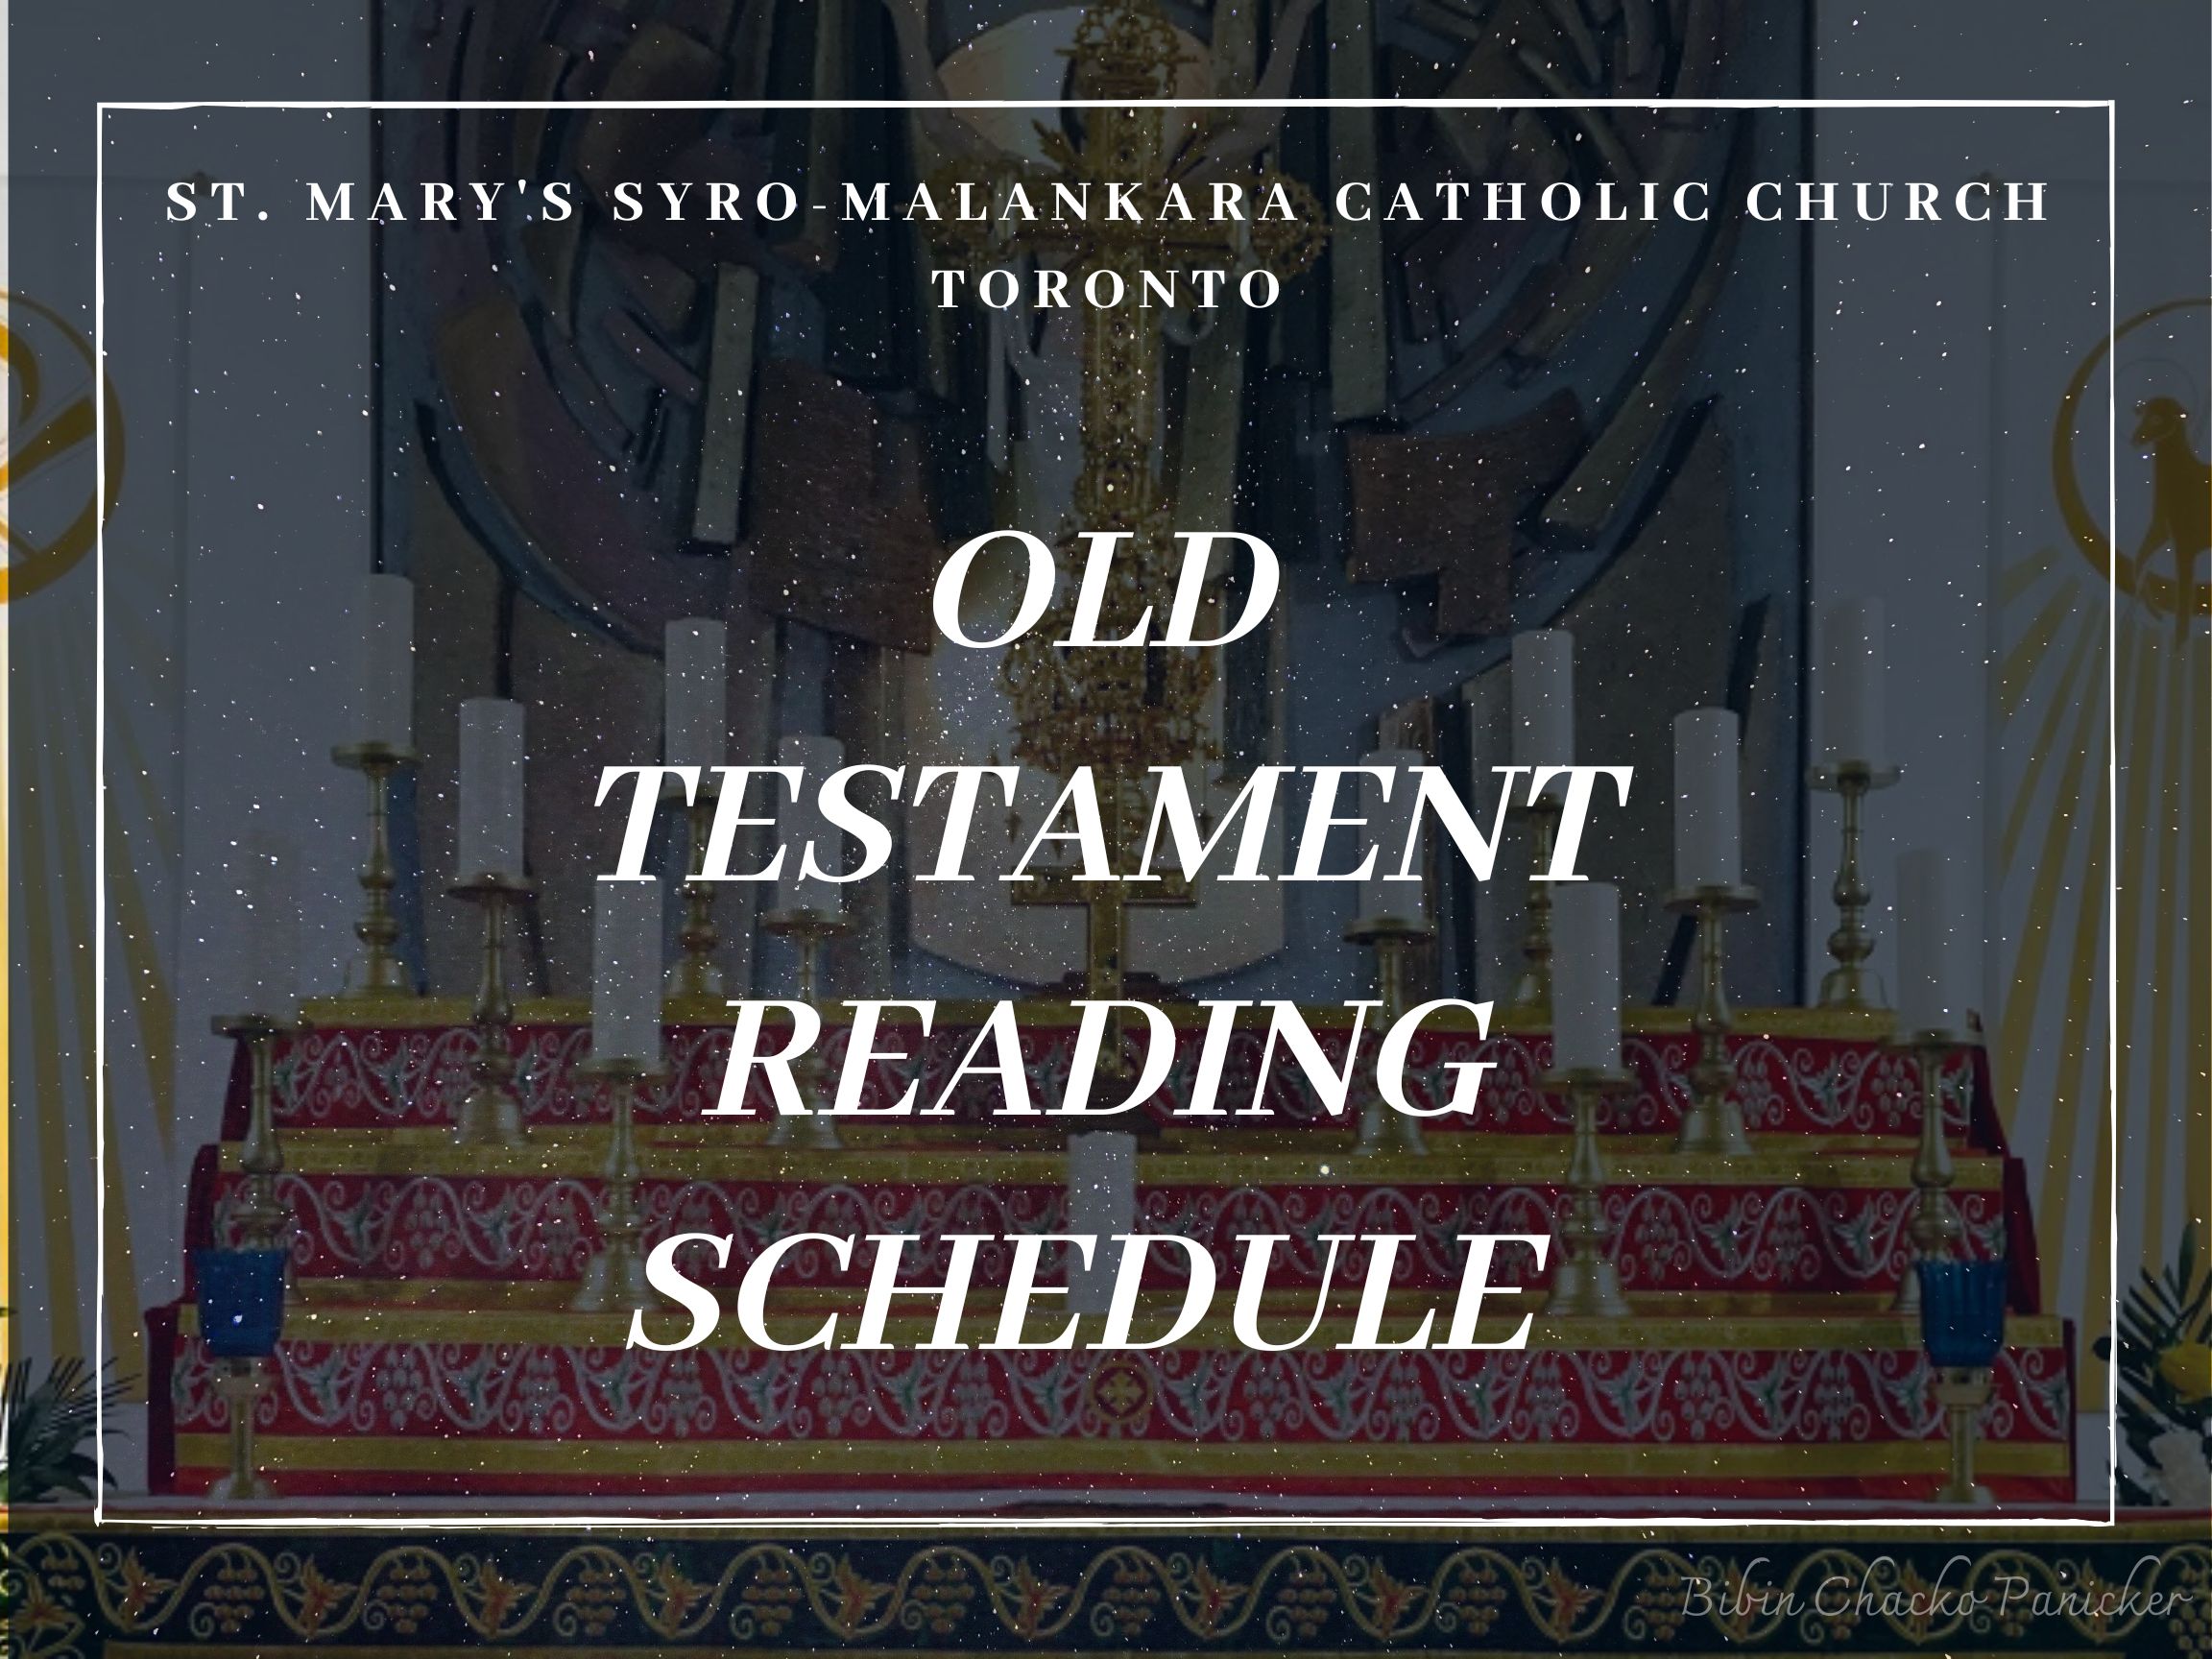 Old Testament Reading Schedule - St Marys' Syro-Malankara Catholic Church, Toronto